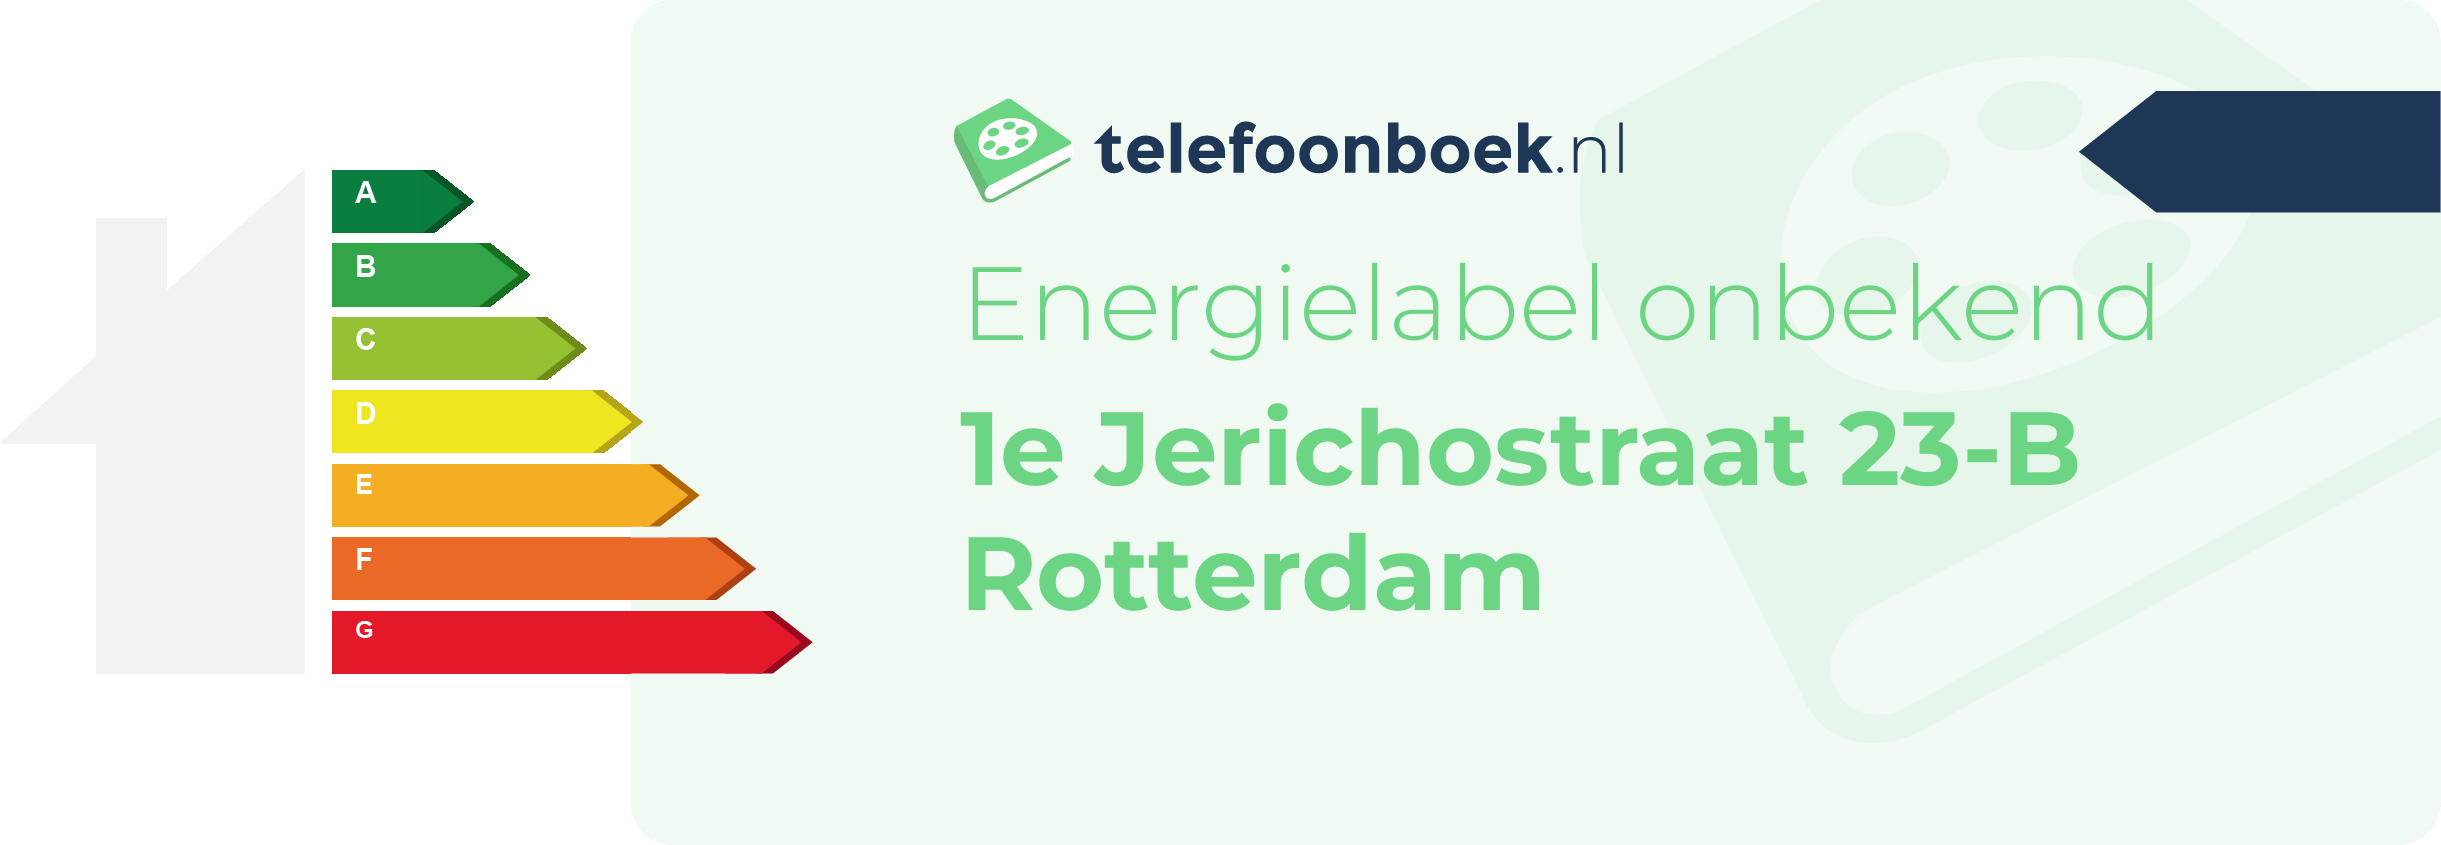 Energielabel 1e Jerichostraat 23-B Rotterdam